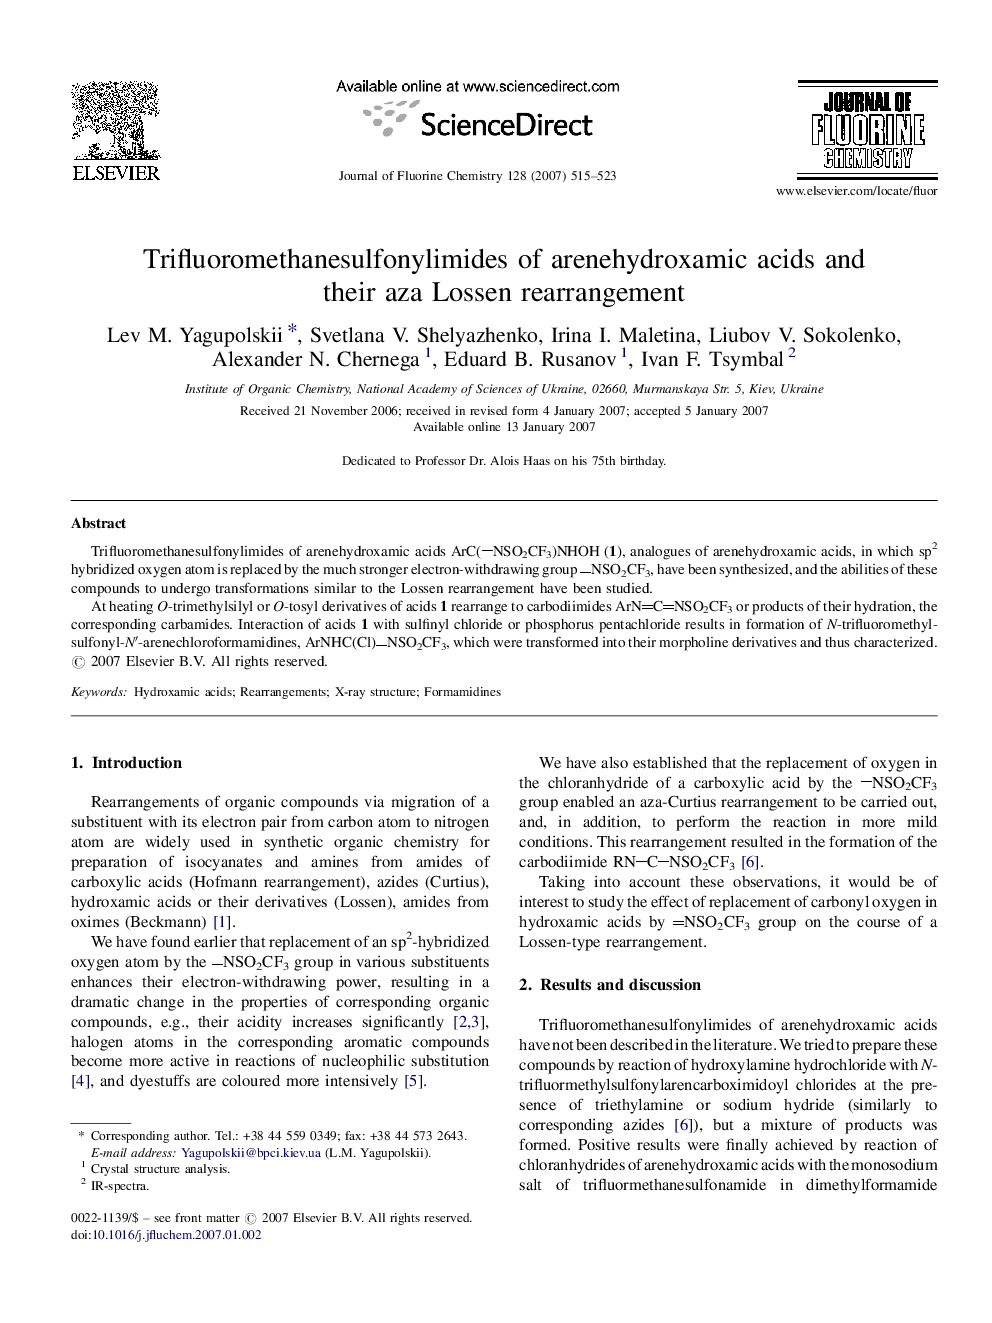 Trifluoromethanesulfonylimides of arenehydroxamic acids and their aza Lossen rearrangement